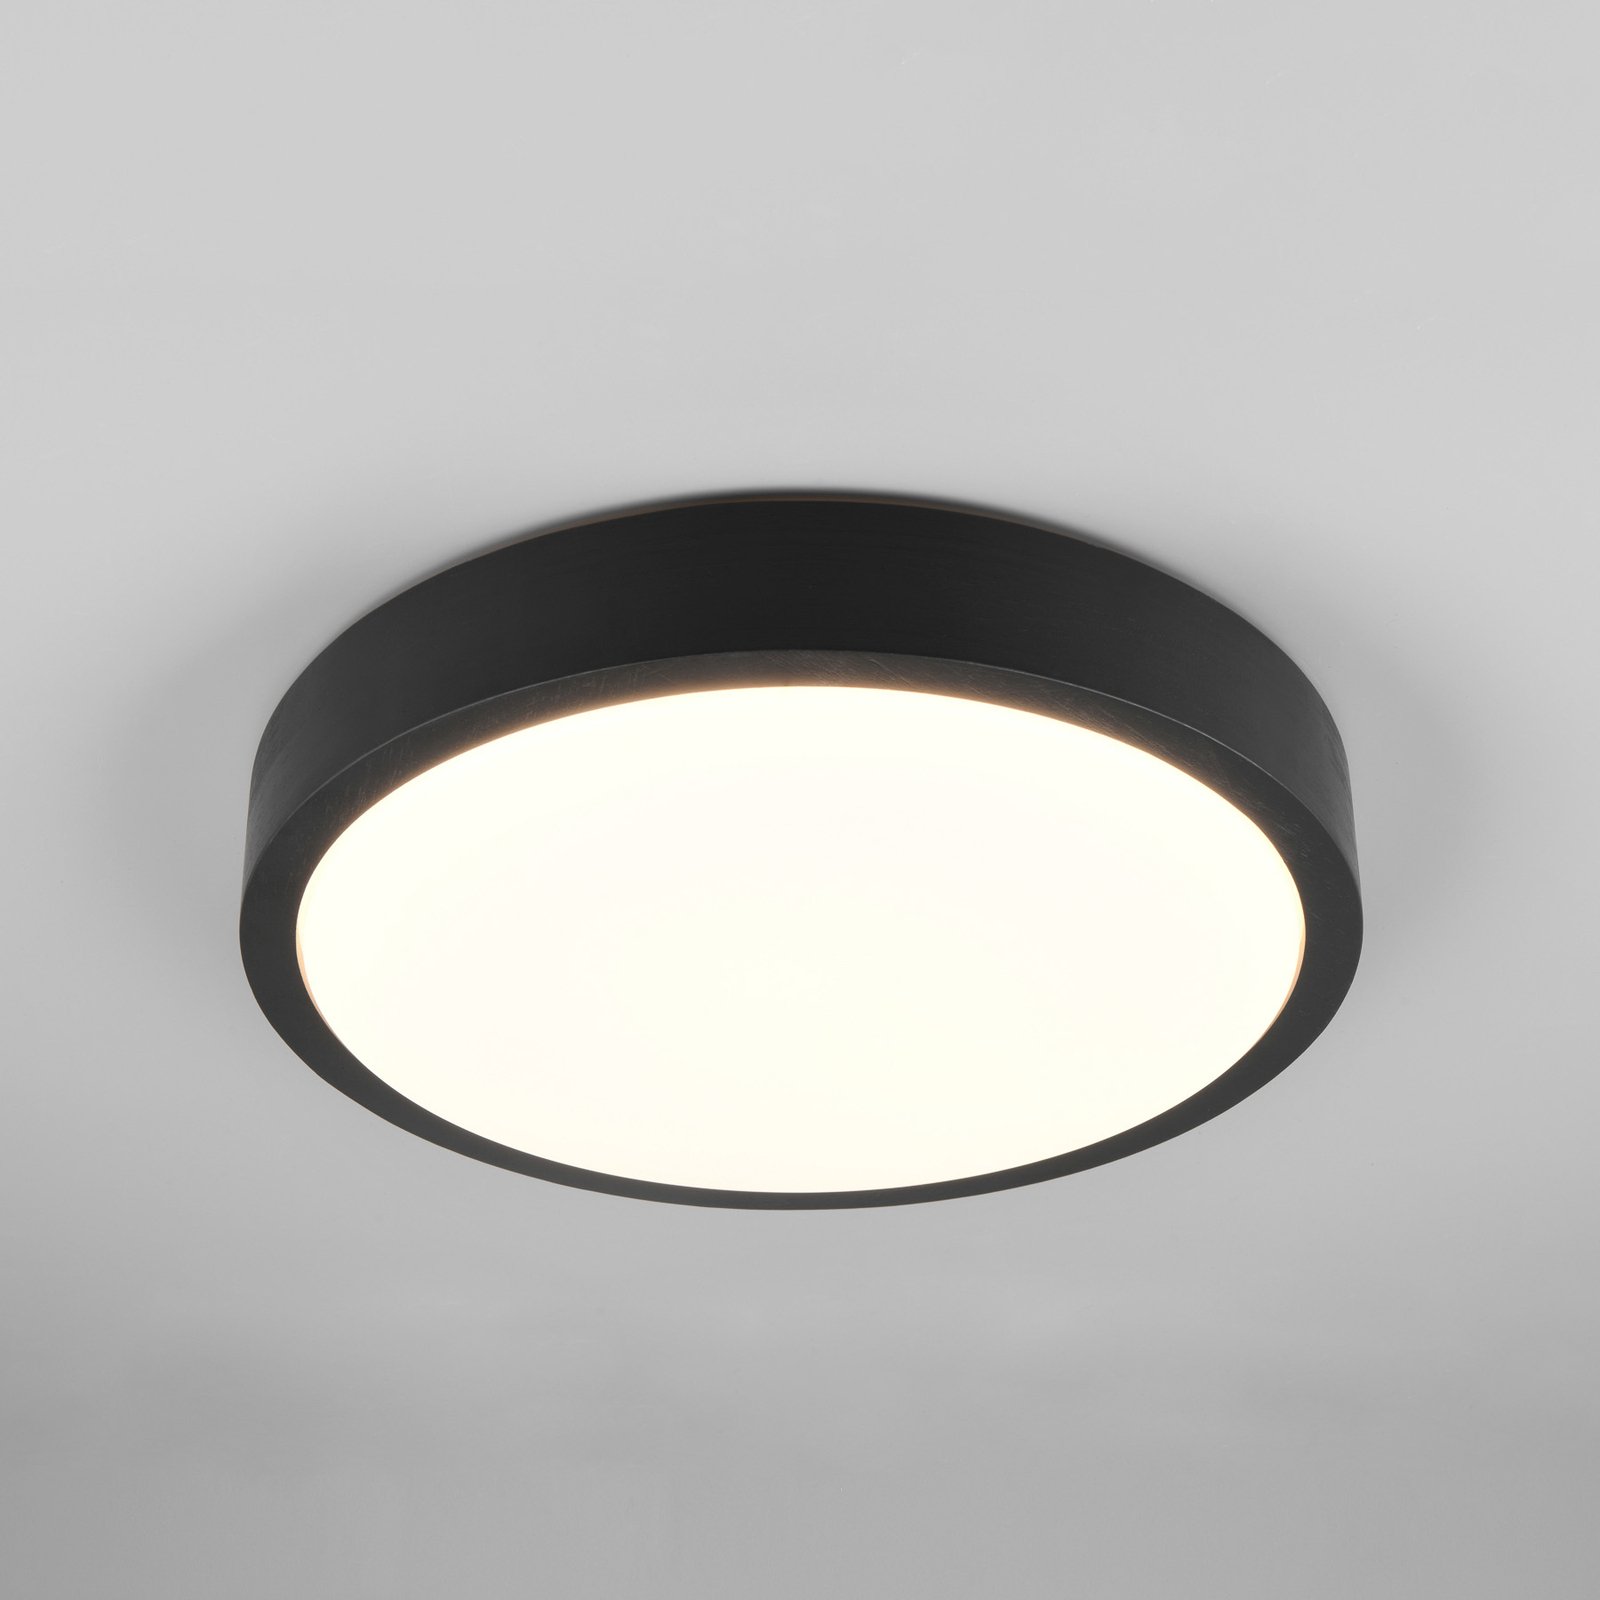 LED ceiling light Iseo, black, Ø 40 cm, dimmable, wood